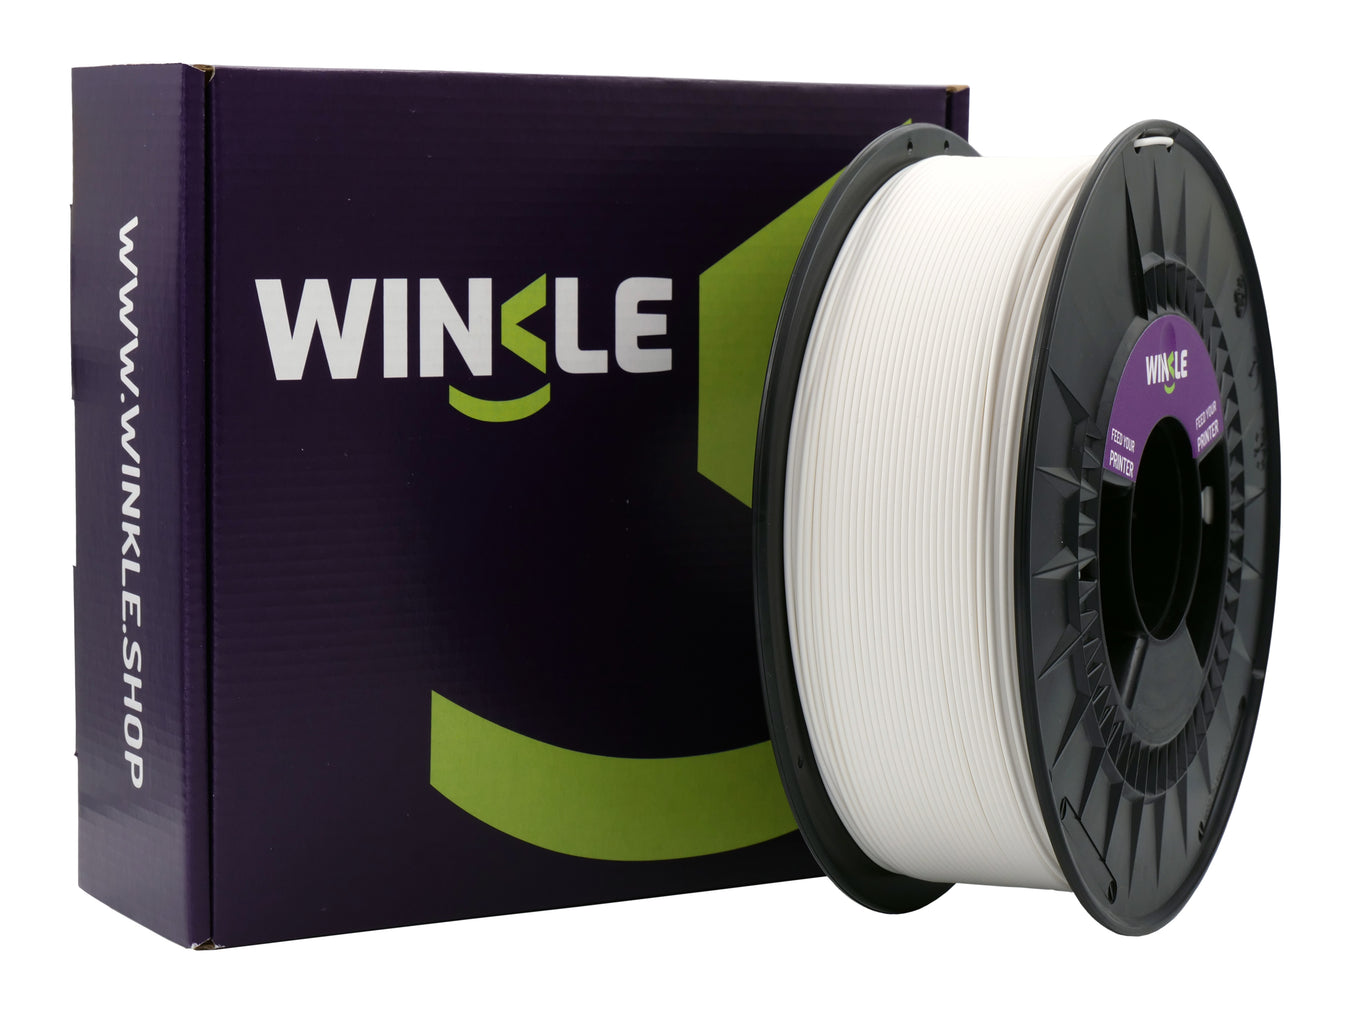 Winkle Premium Filaments